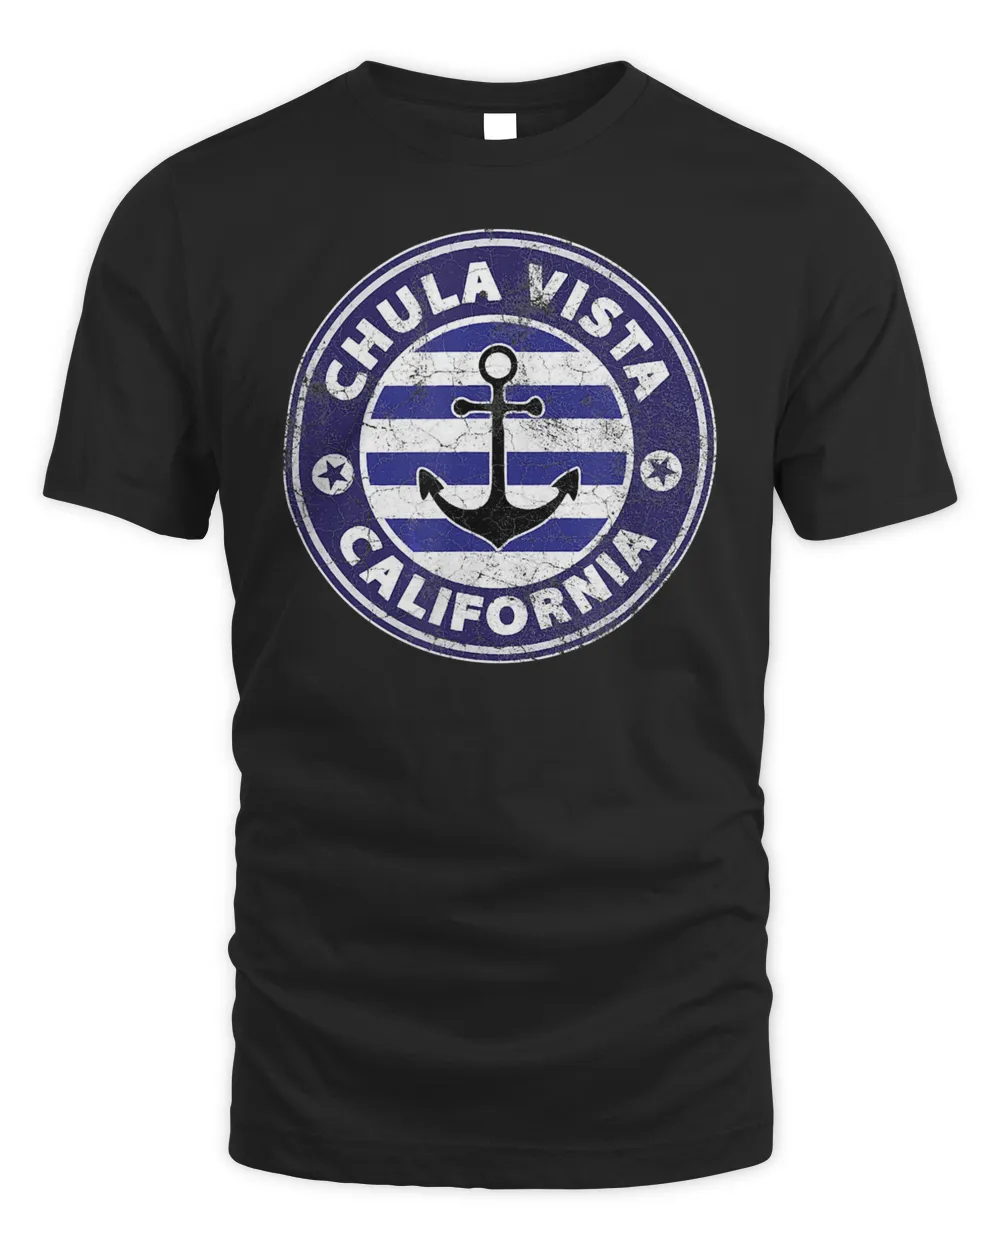 Chula Vista CA California United States sailing souvenir T-Shirt